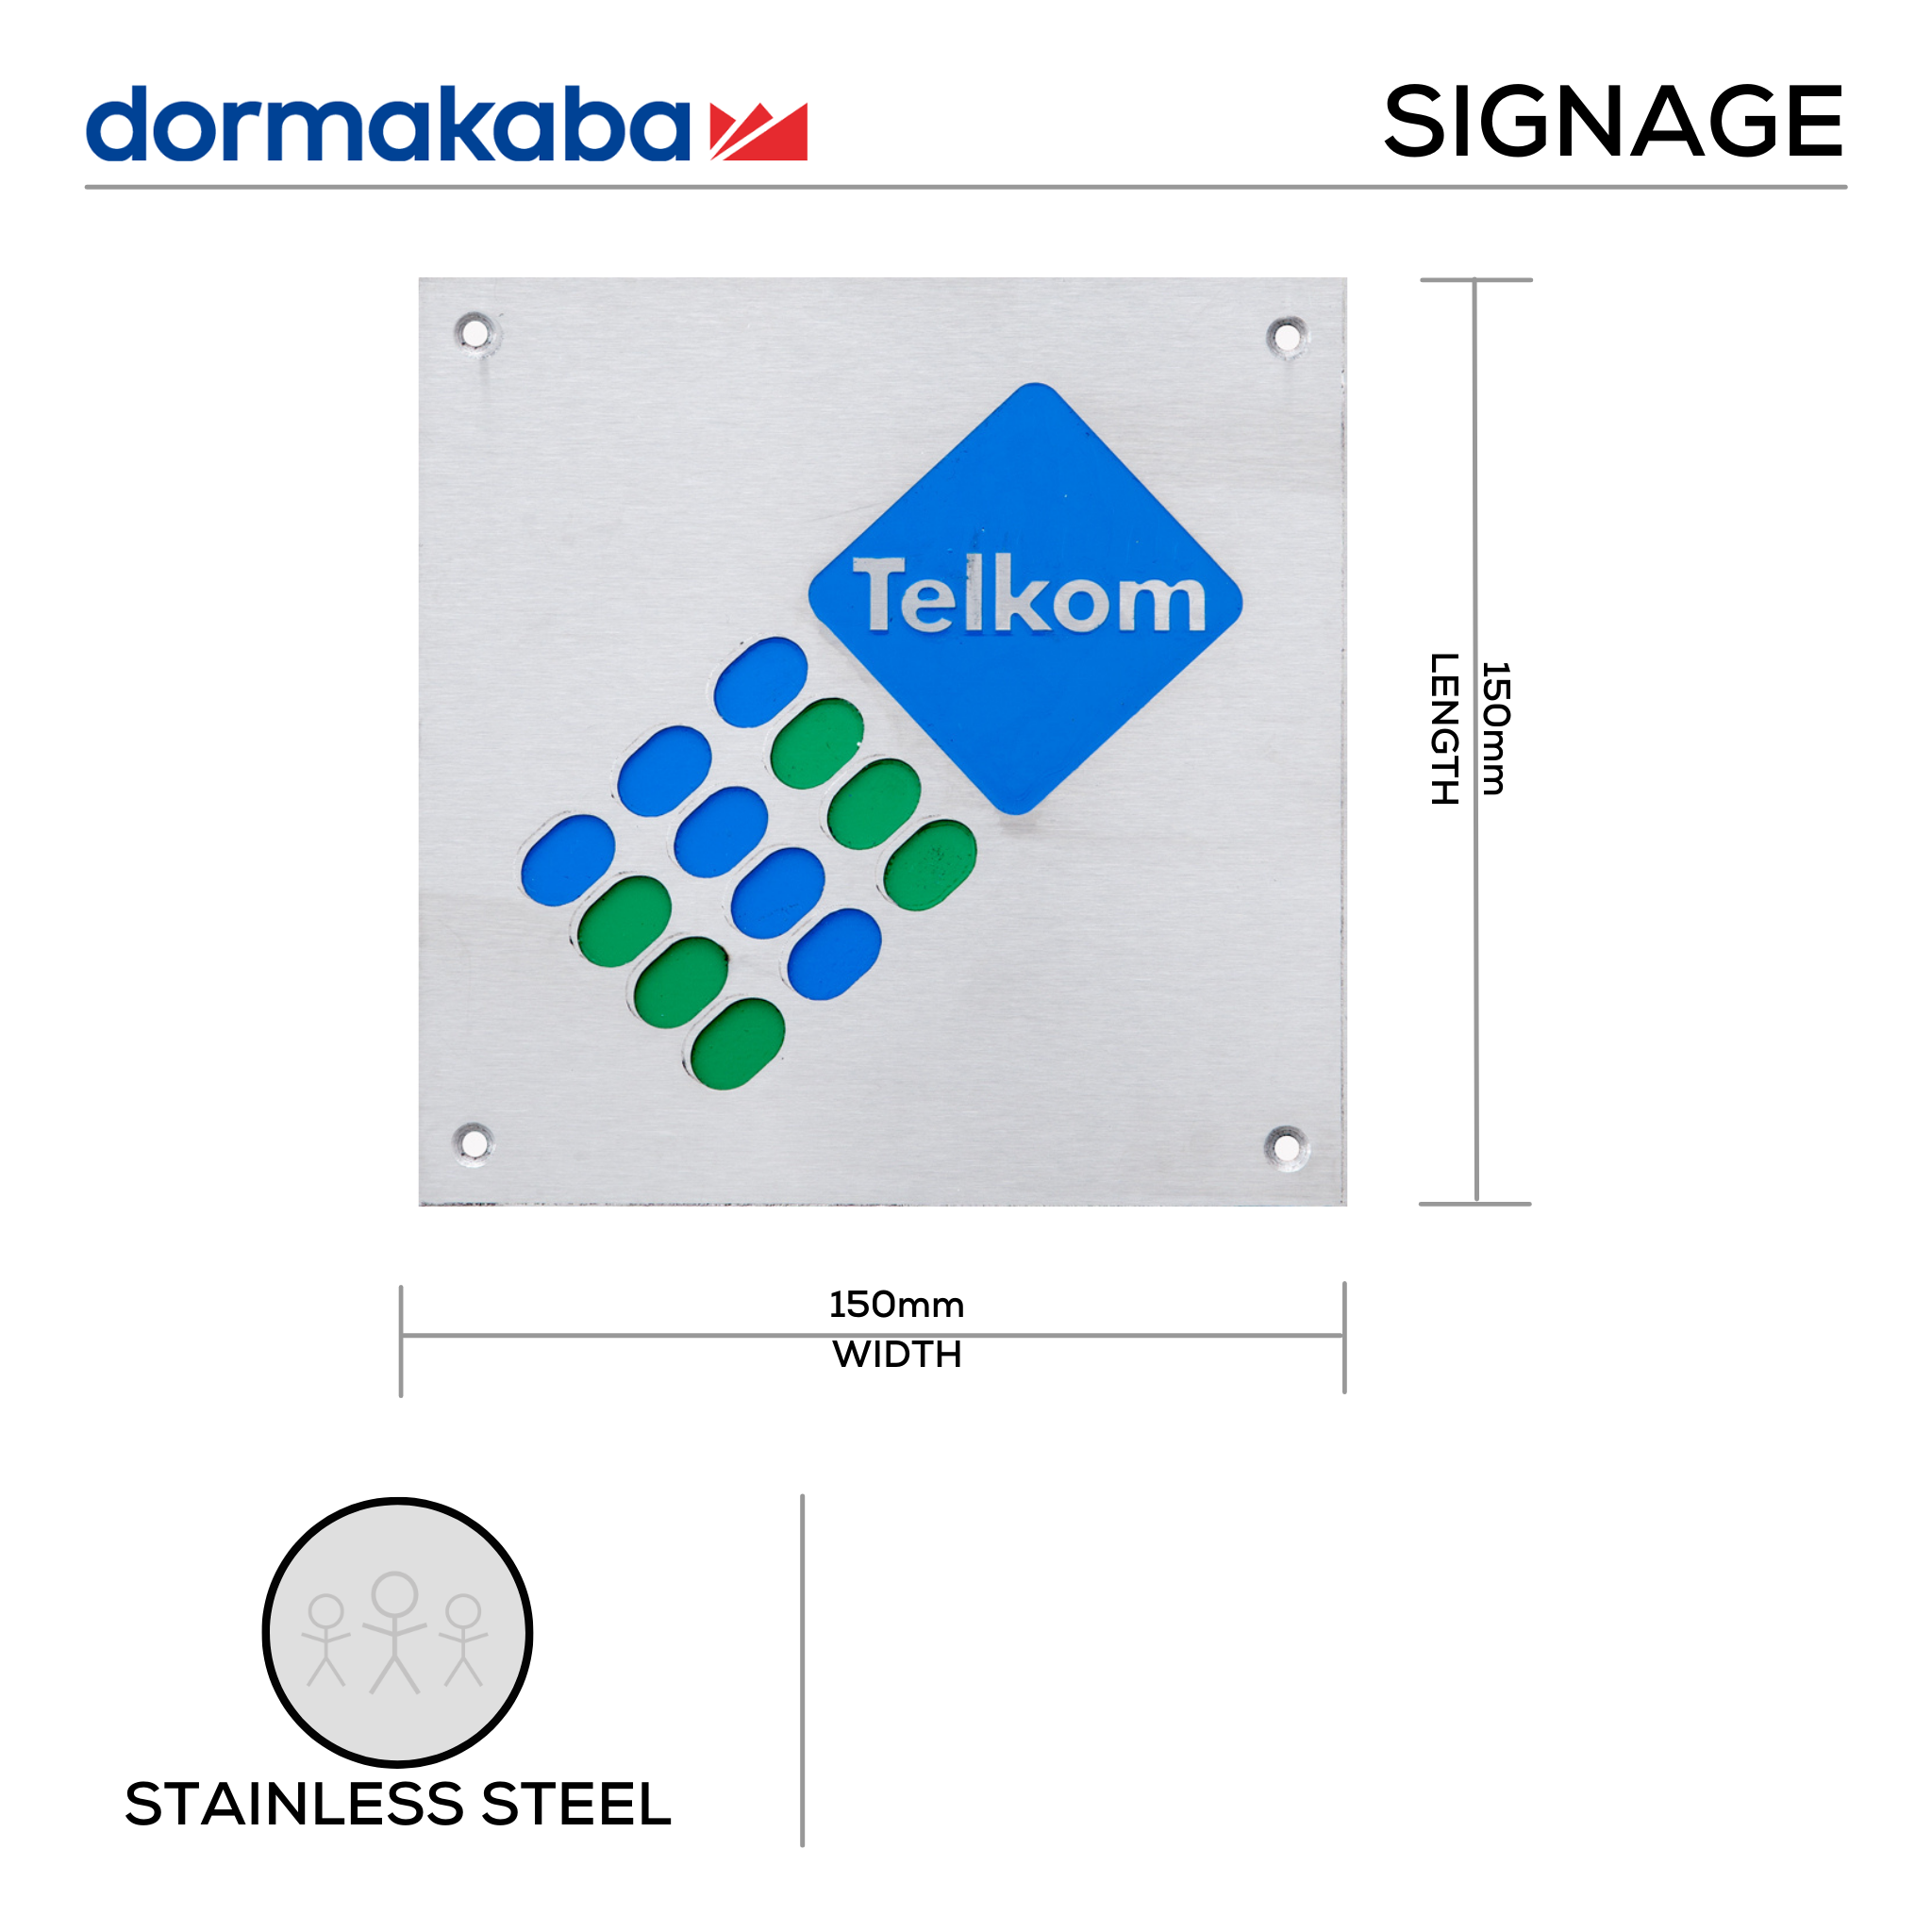 DSS-137, Door Signage, Telkom/Telephone , 150mm (l), 150mm (w), 1,2mm (t), Stainless Steel, DORMAKABA